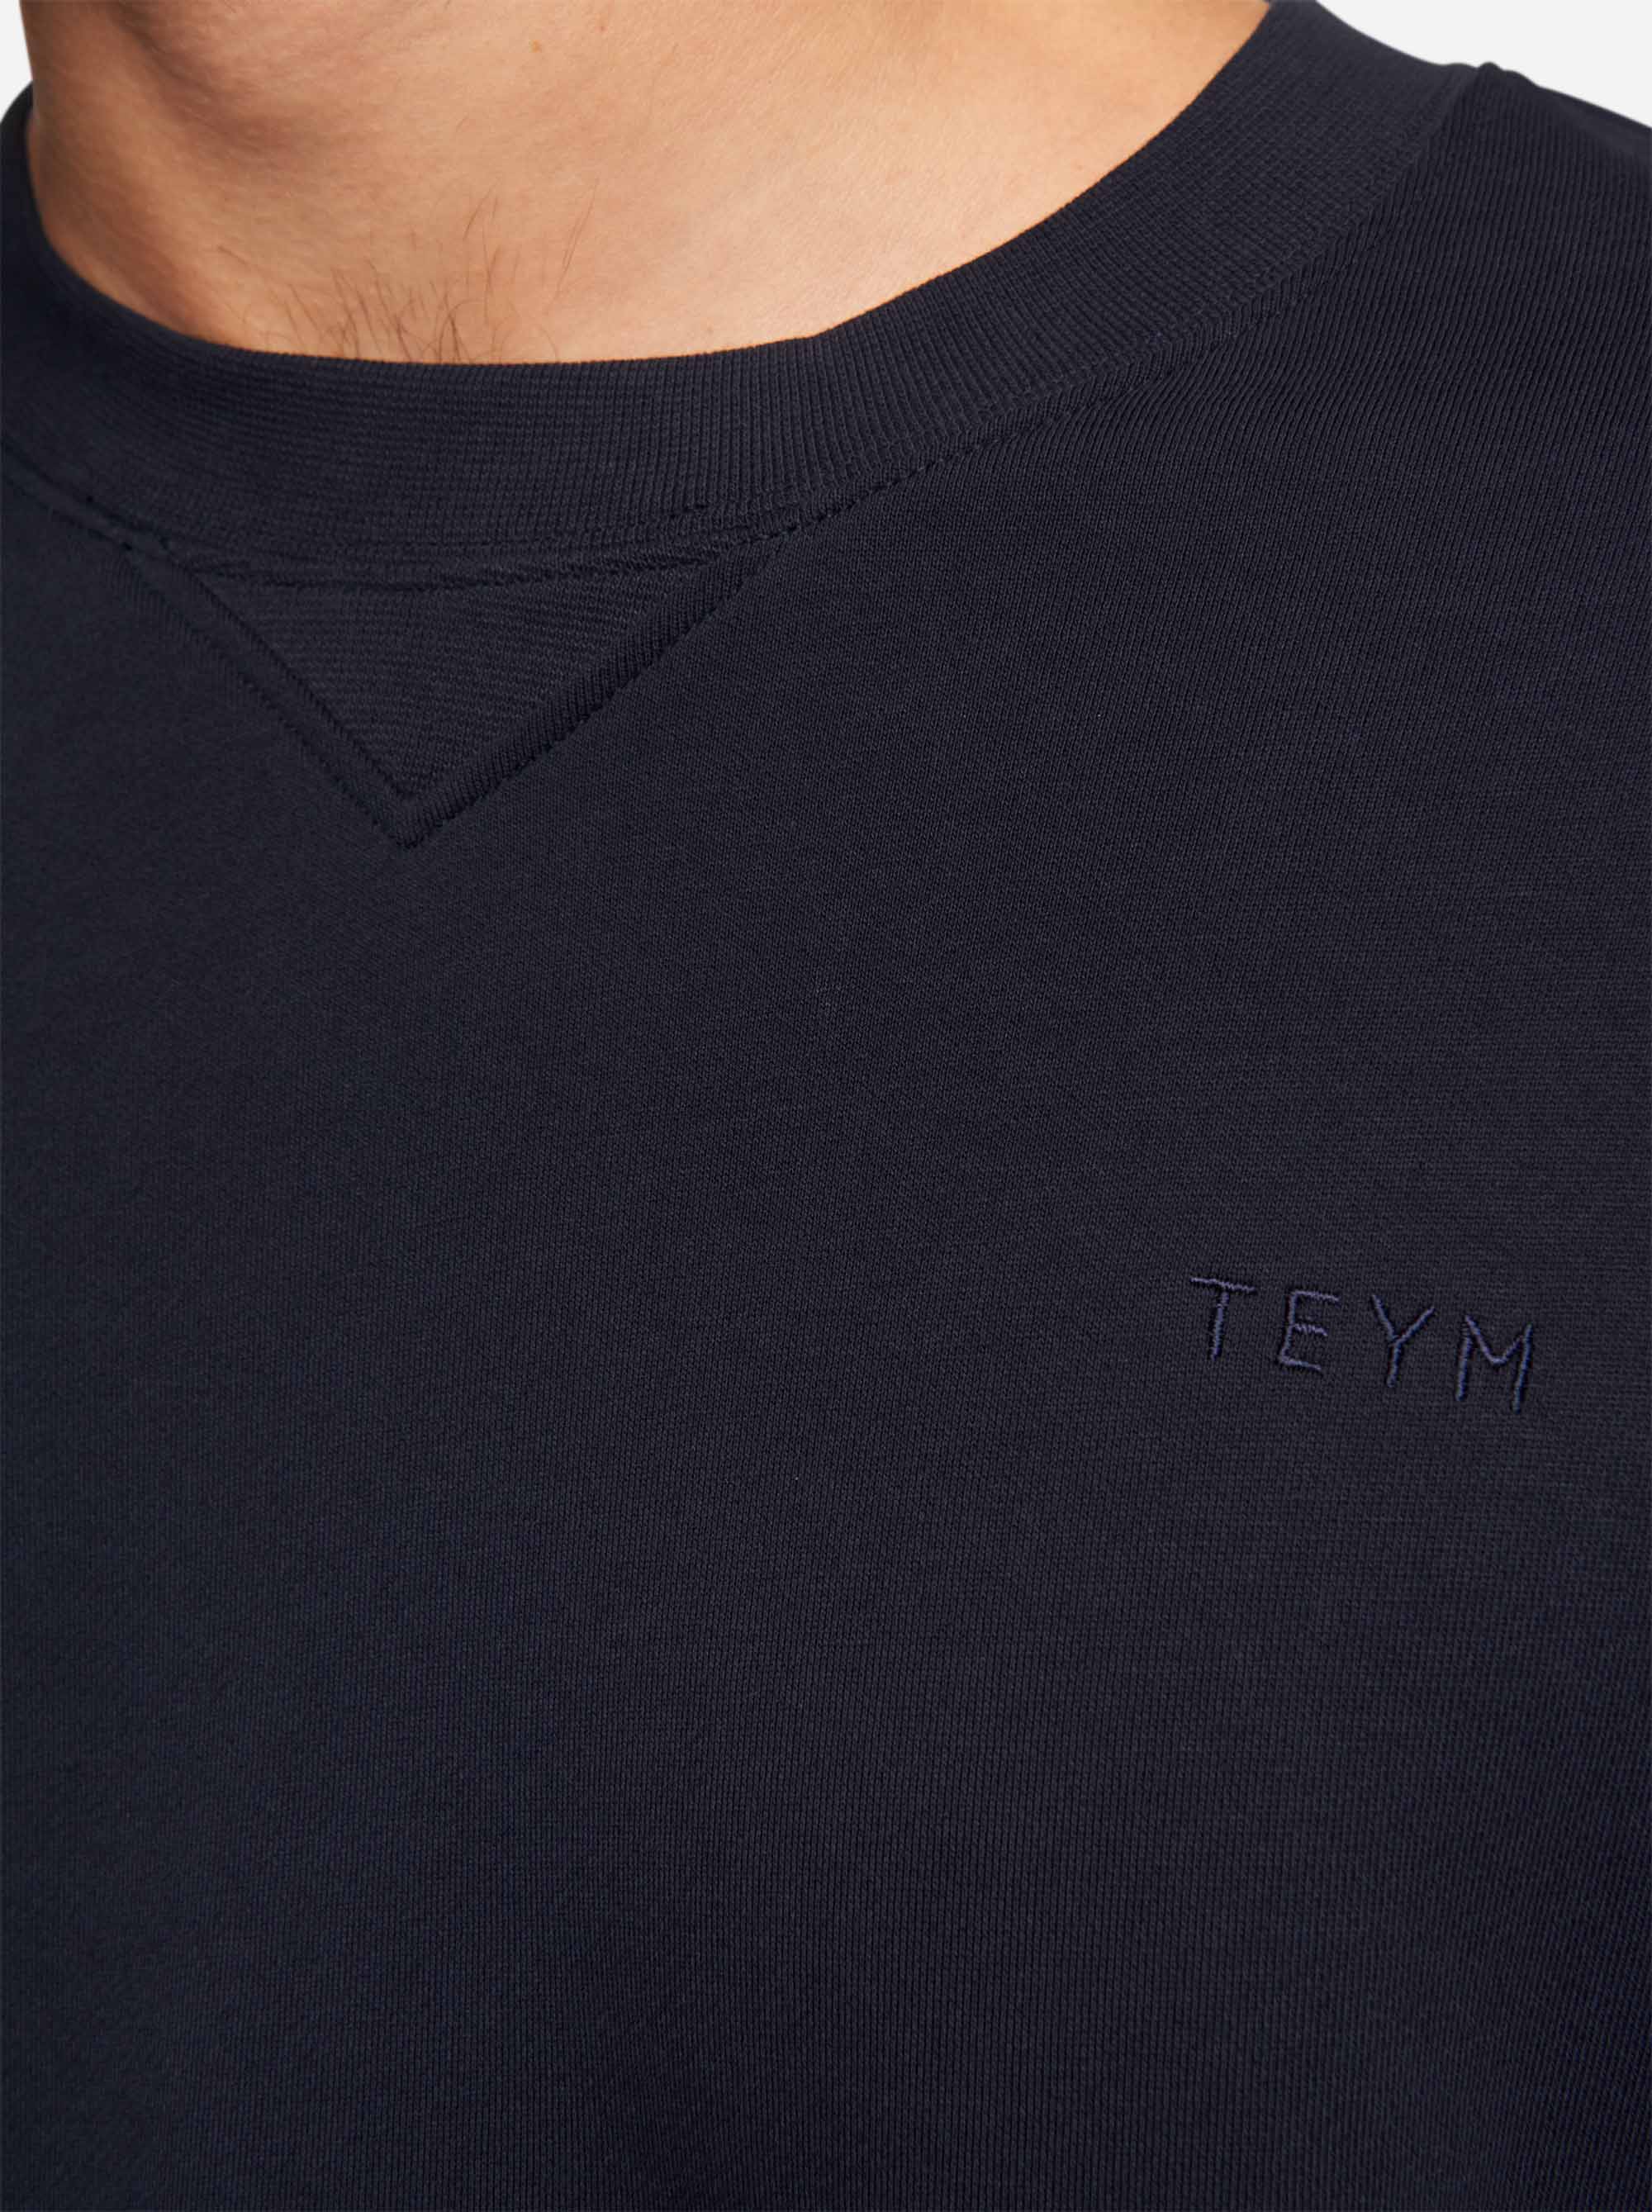 Teym - The Sweatshirt - Men - Blue - 4